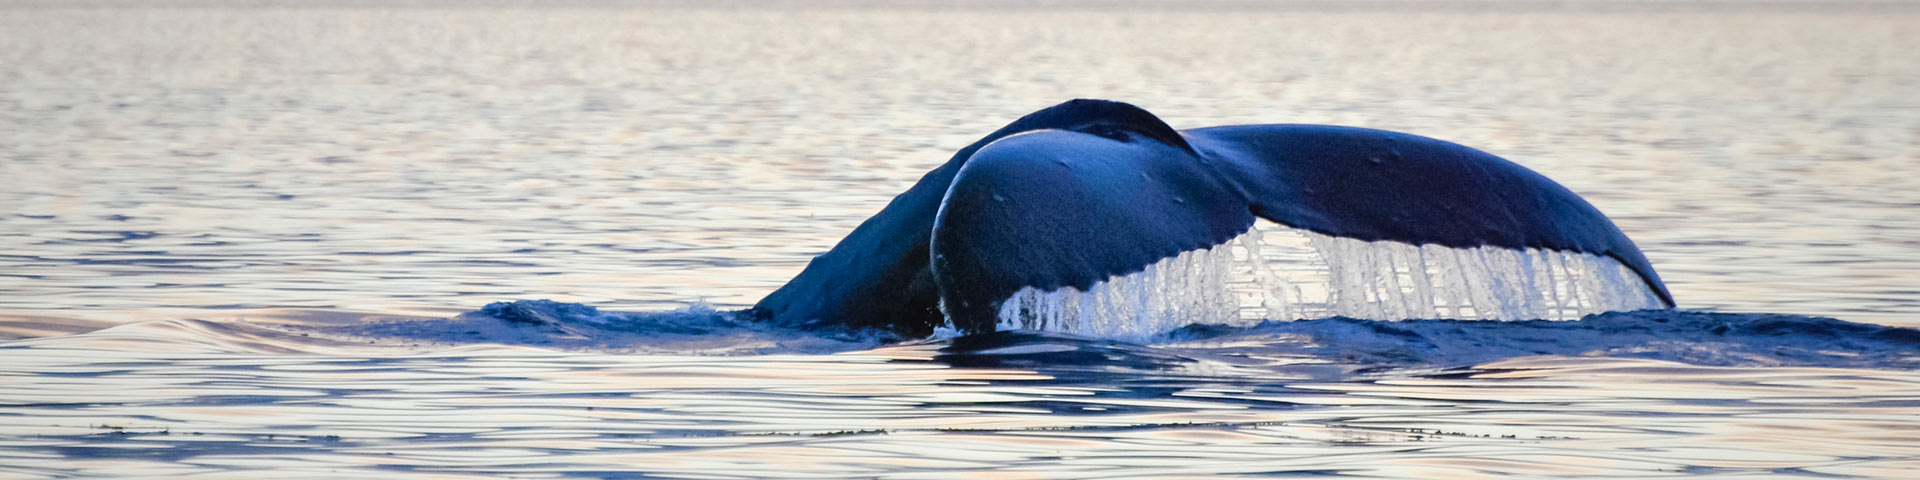 A whale’s tail breaching.